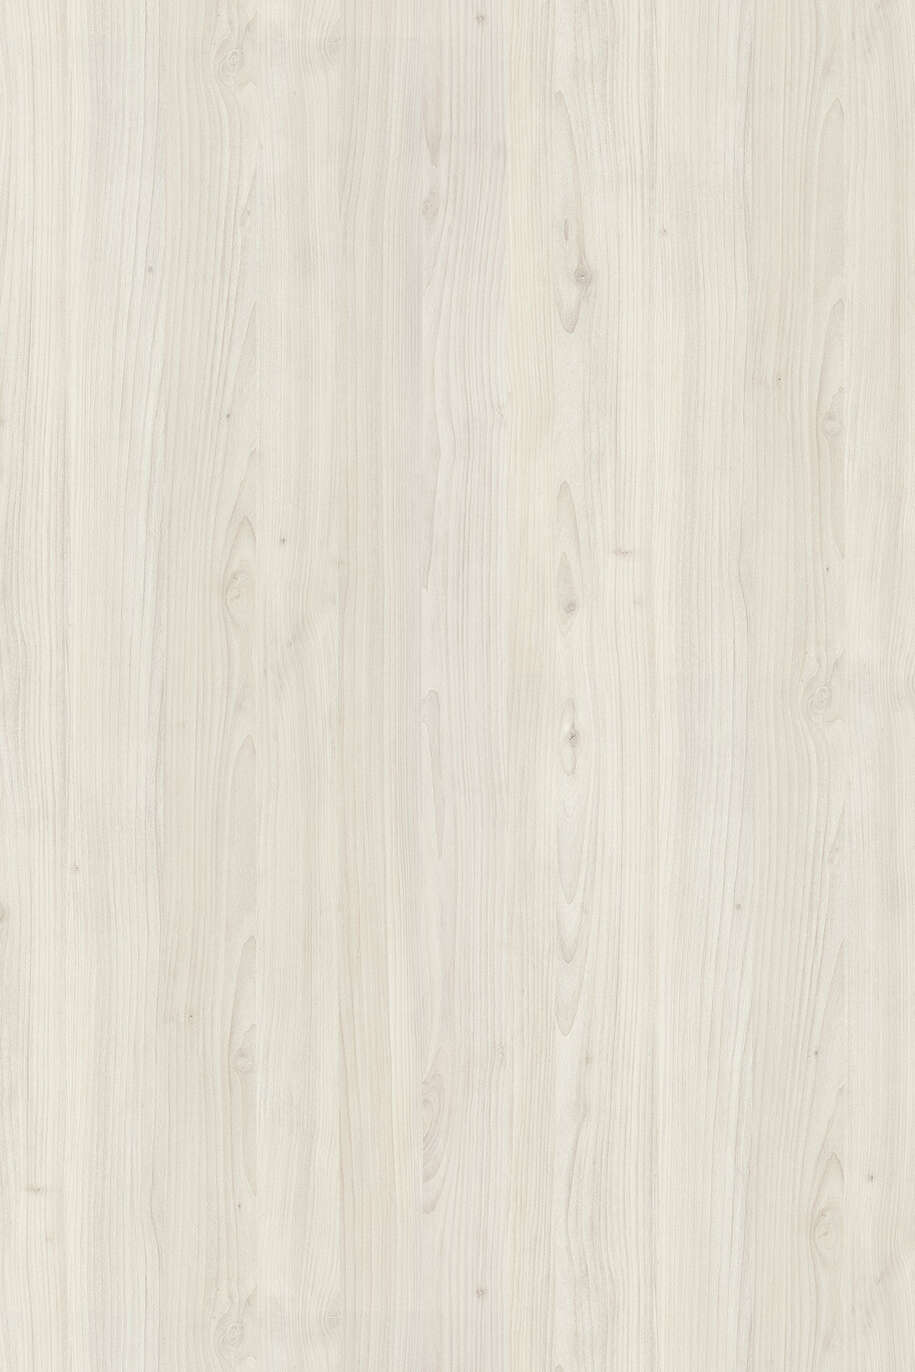 LDTD K088 PW White Nordic Wood 18 x 2070 x 2800 mm